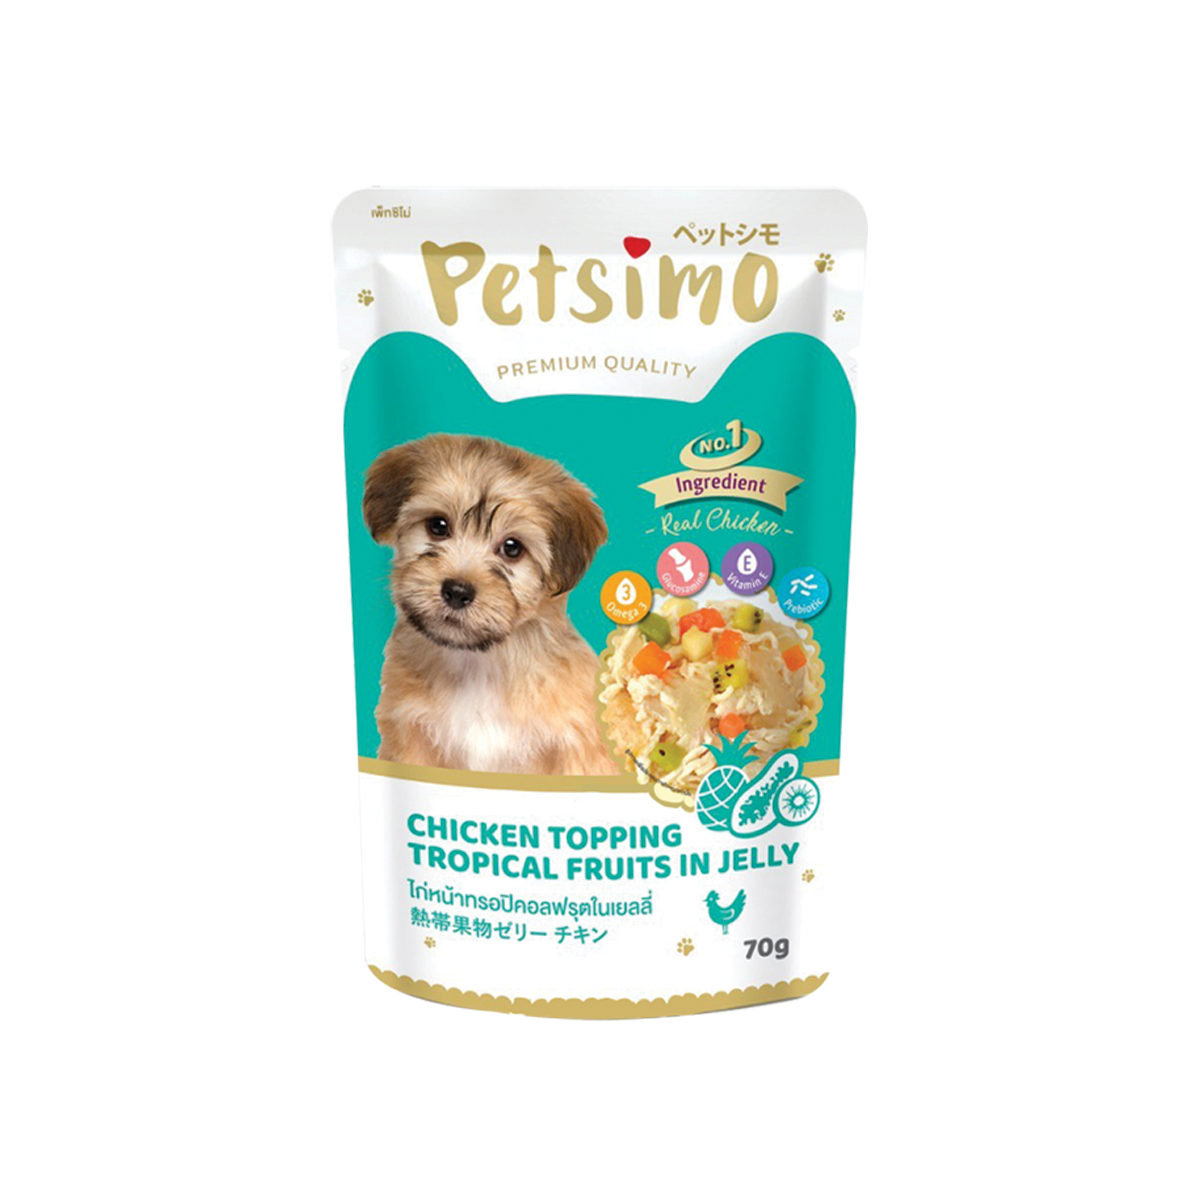 Petsimo Pouch Dog Food Chicken Formula Tropical Fruit in Jelly เพ็ทซิโม่ อาหารเปียกสำหรับสุนัข รสไก่-ทรอปิคอลฟรุ๊ต ในเจลลี่ ขนาด 70กรัม (12ซอง)